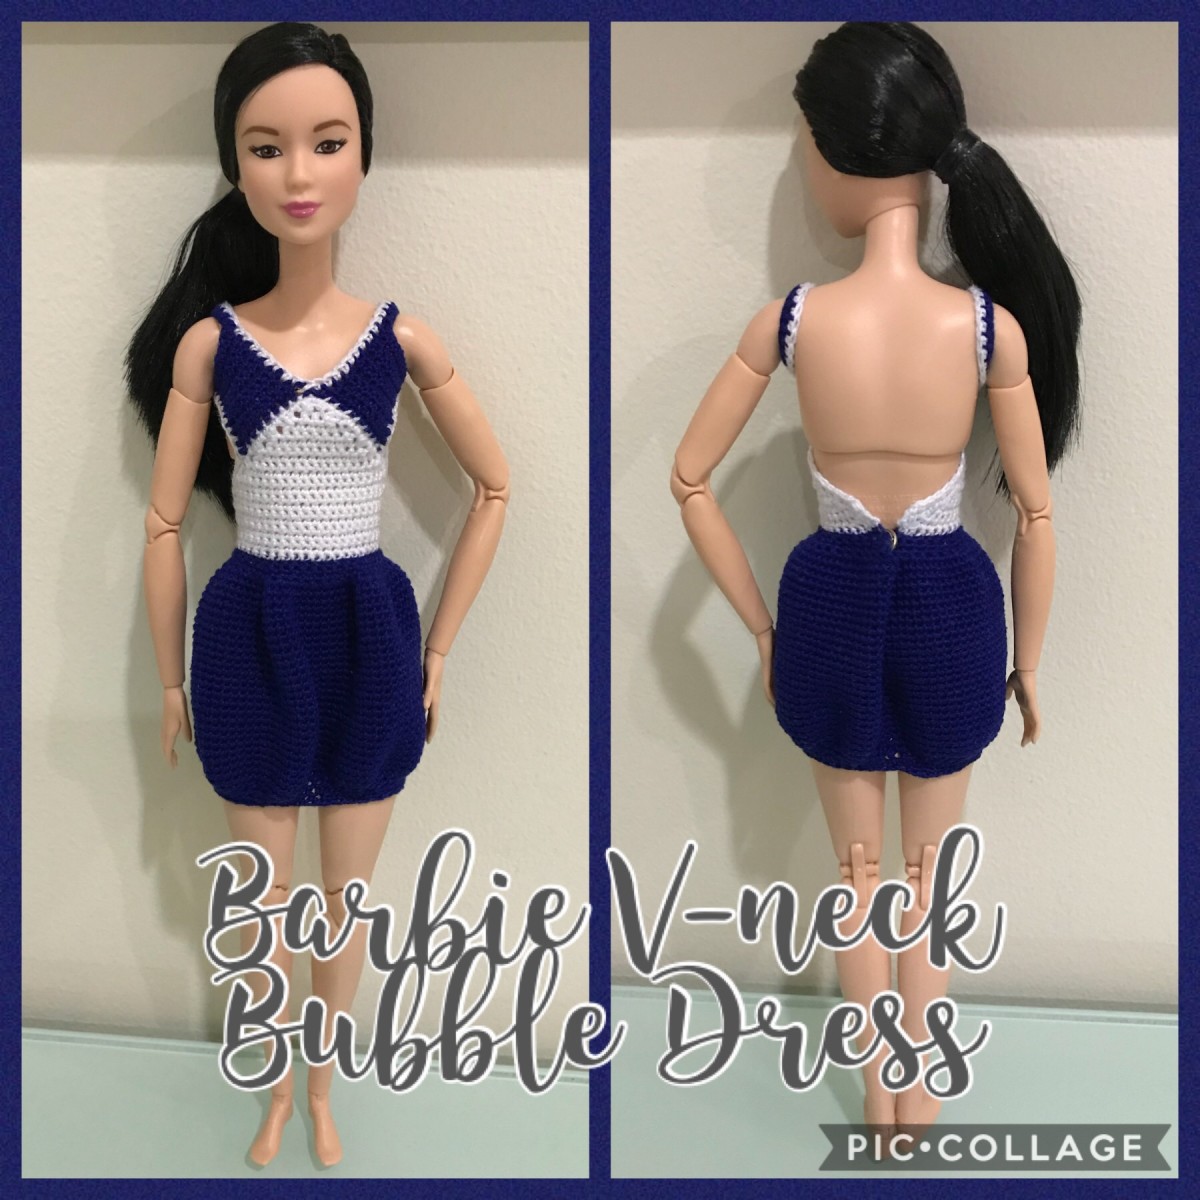 Barbie v-neck bubble dress